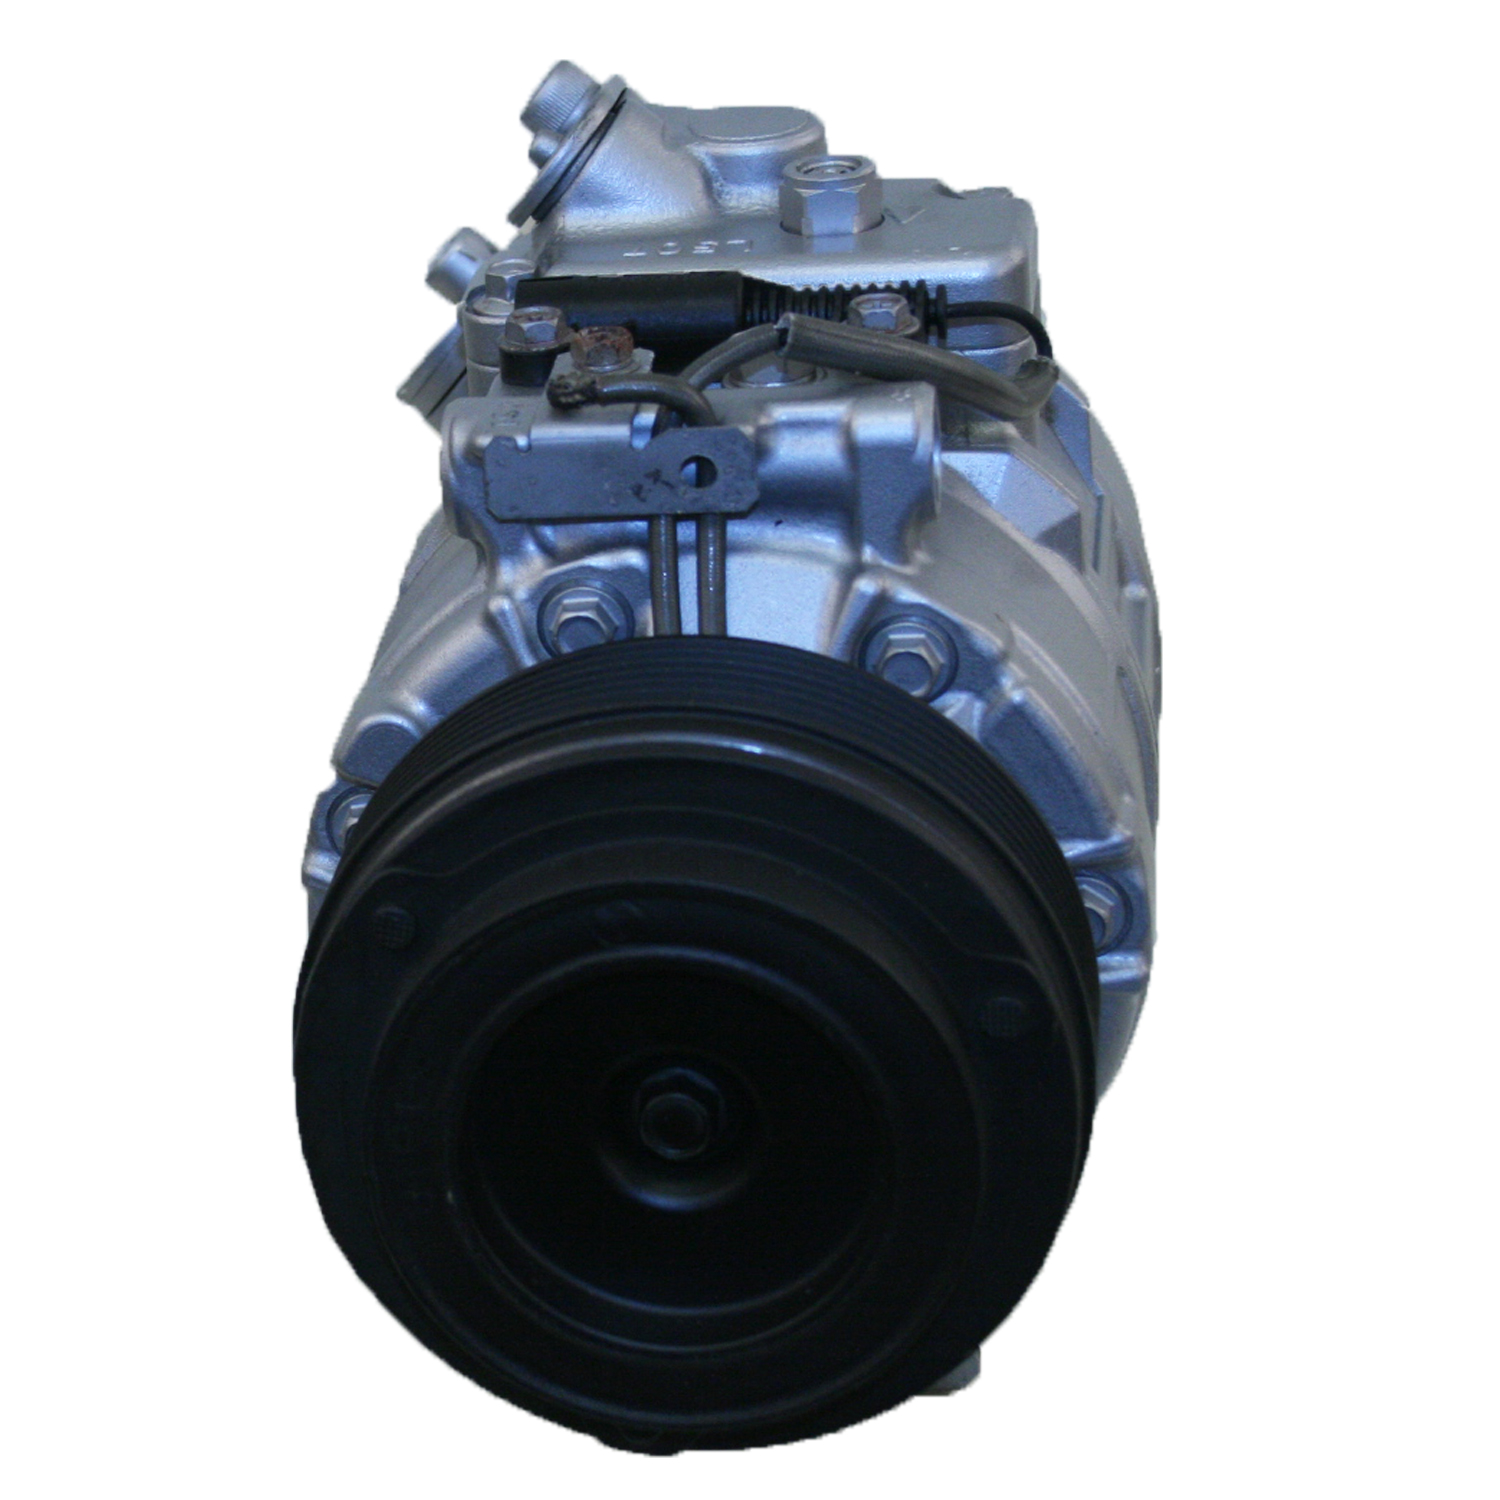 TCW Compressor 31774.6T1 Remanufactured Product Image field_60b6a13a6e67c